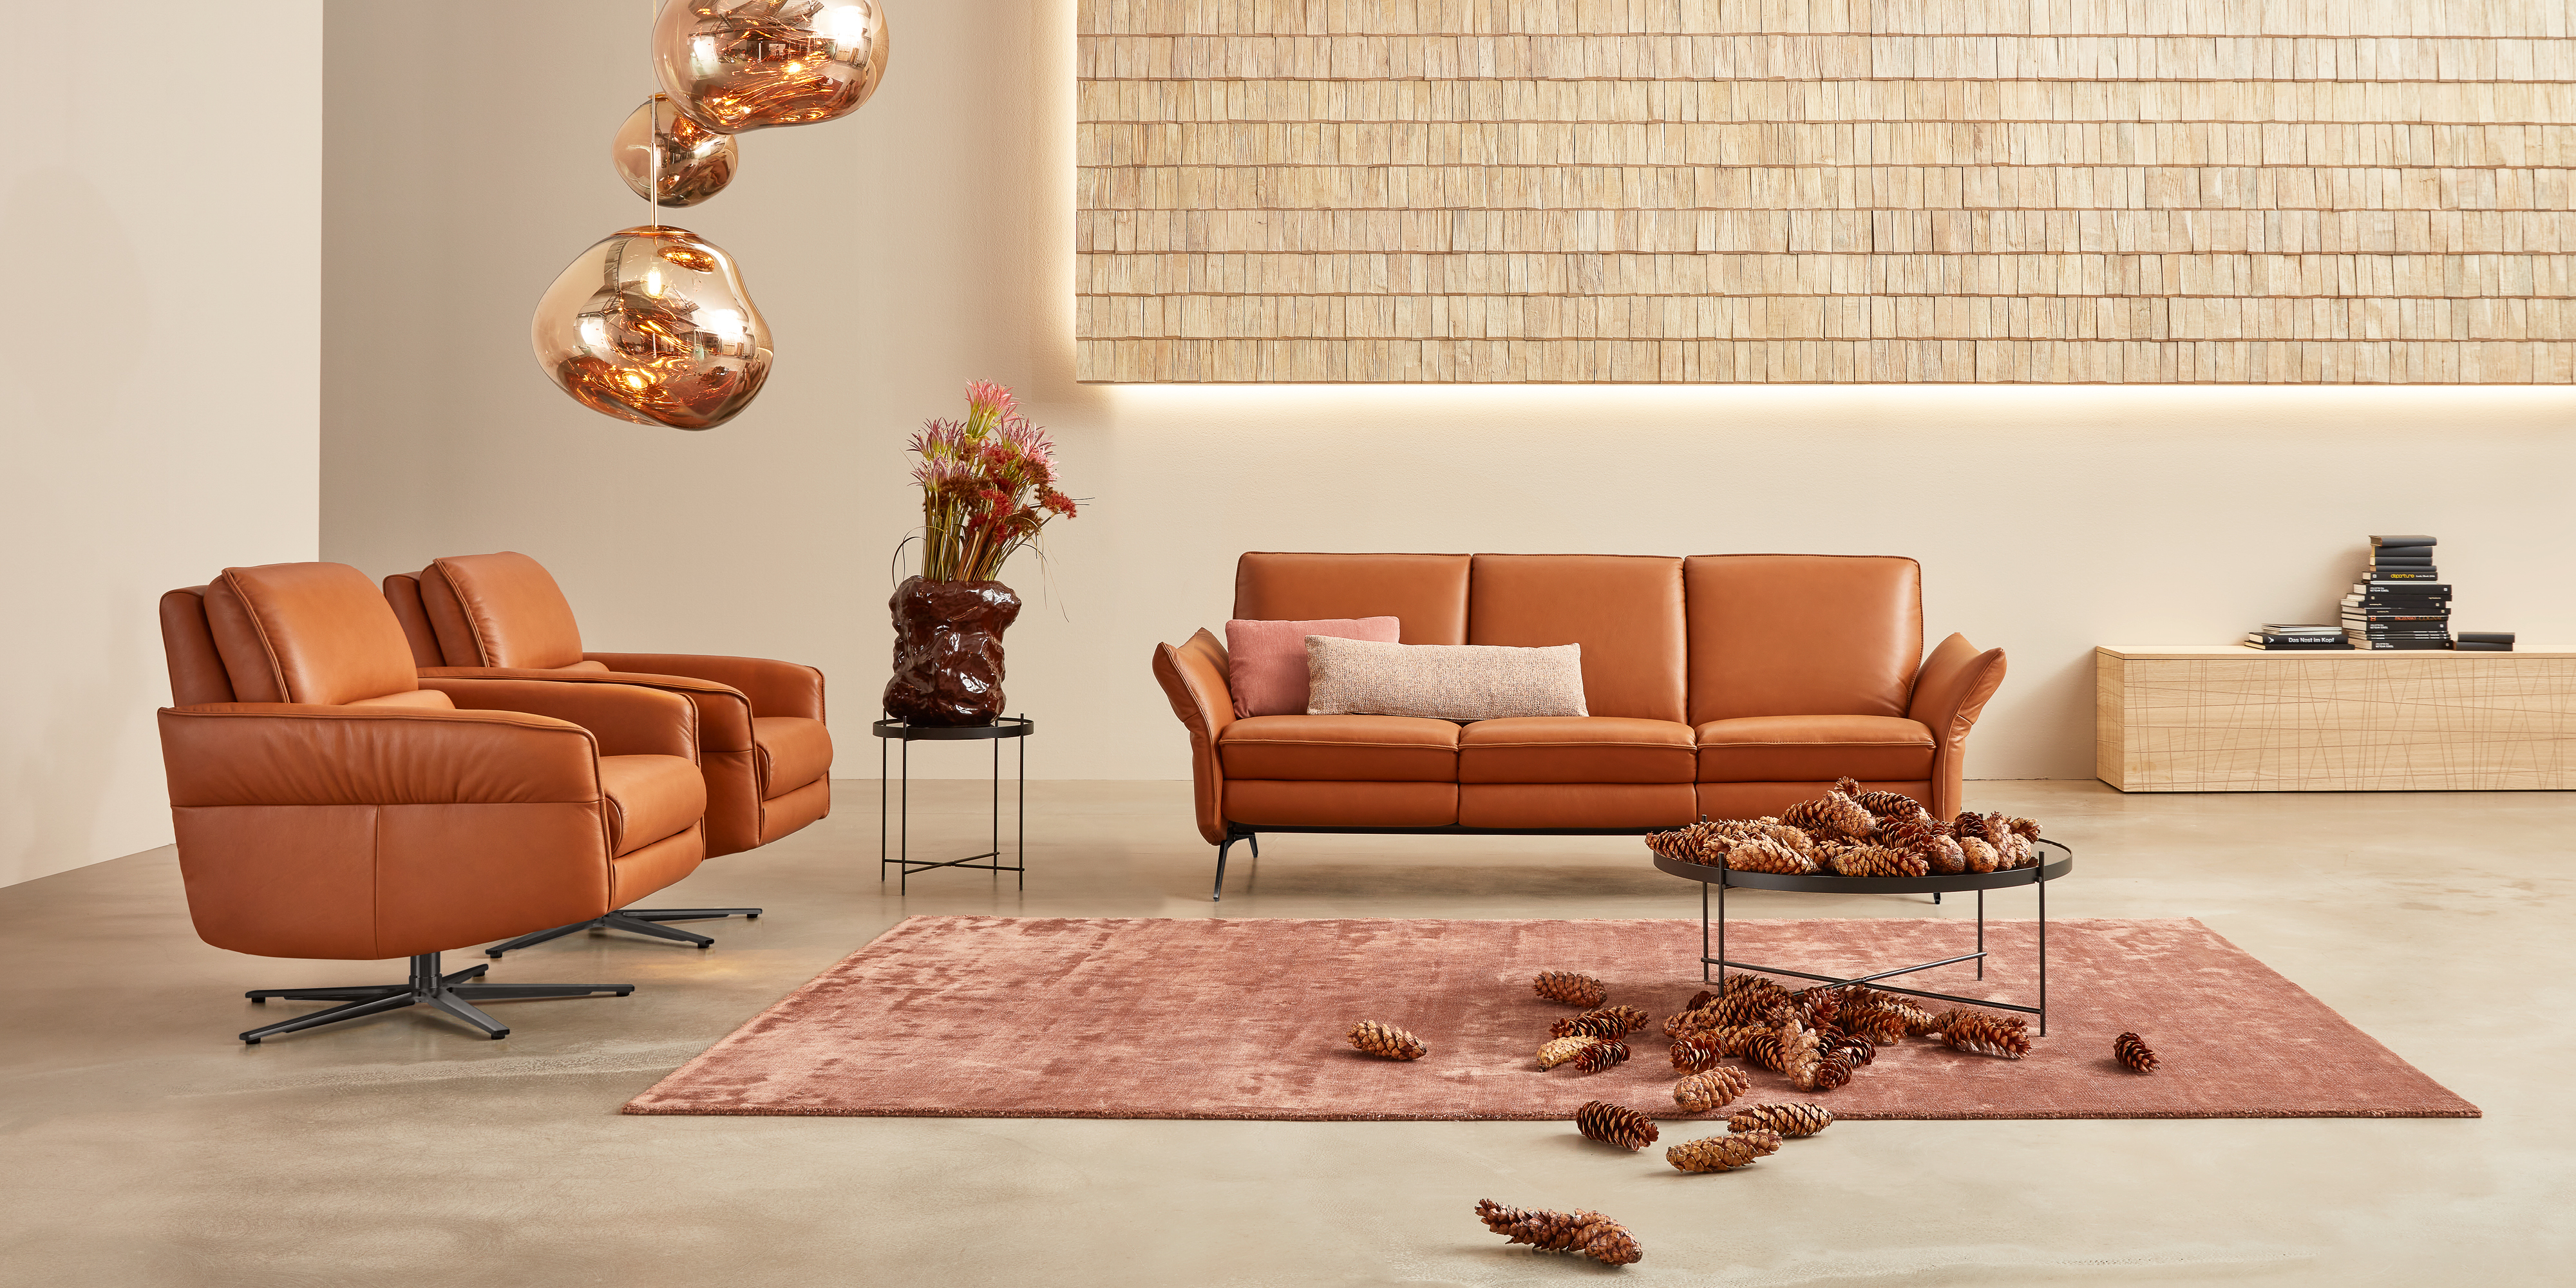 SIEGFRIED reclining sofa 8565 by himolla